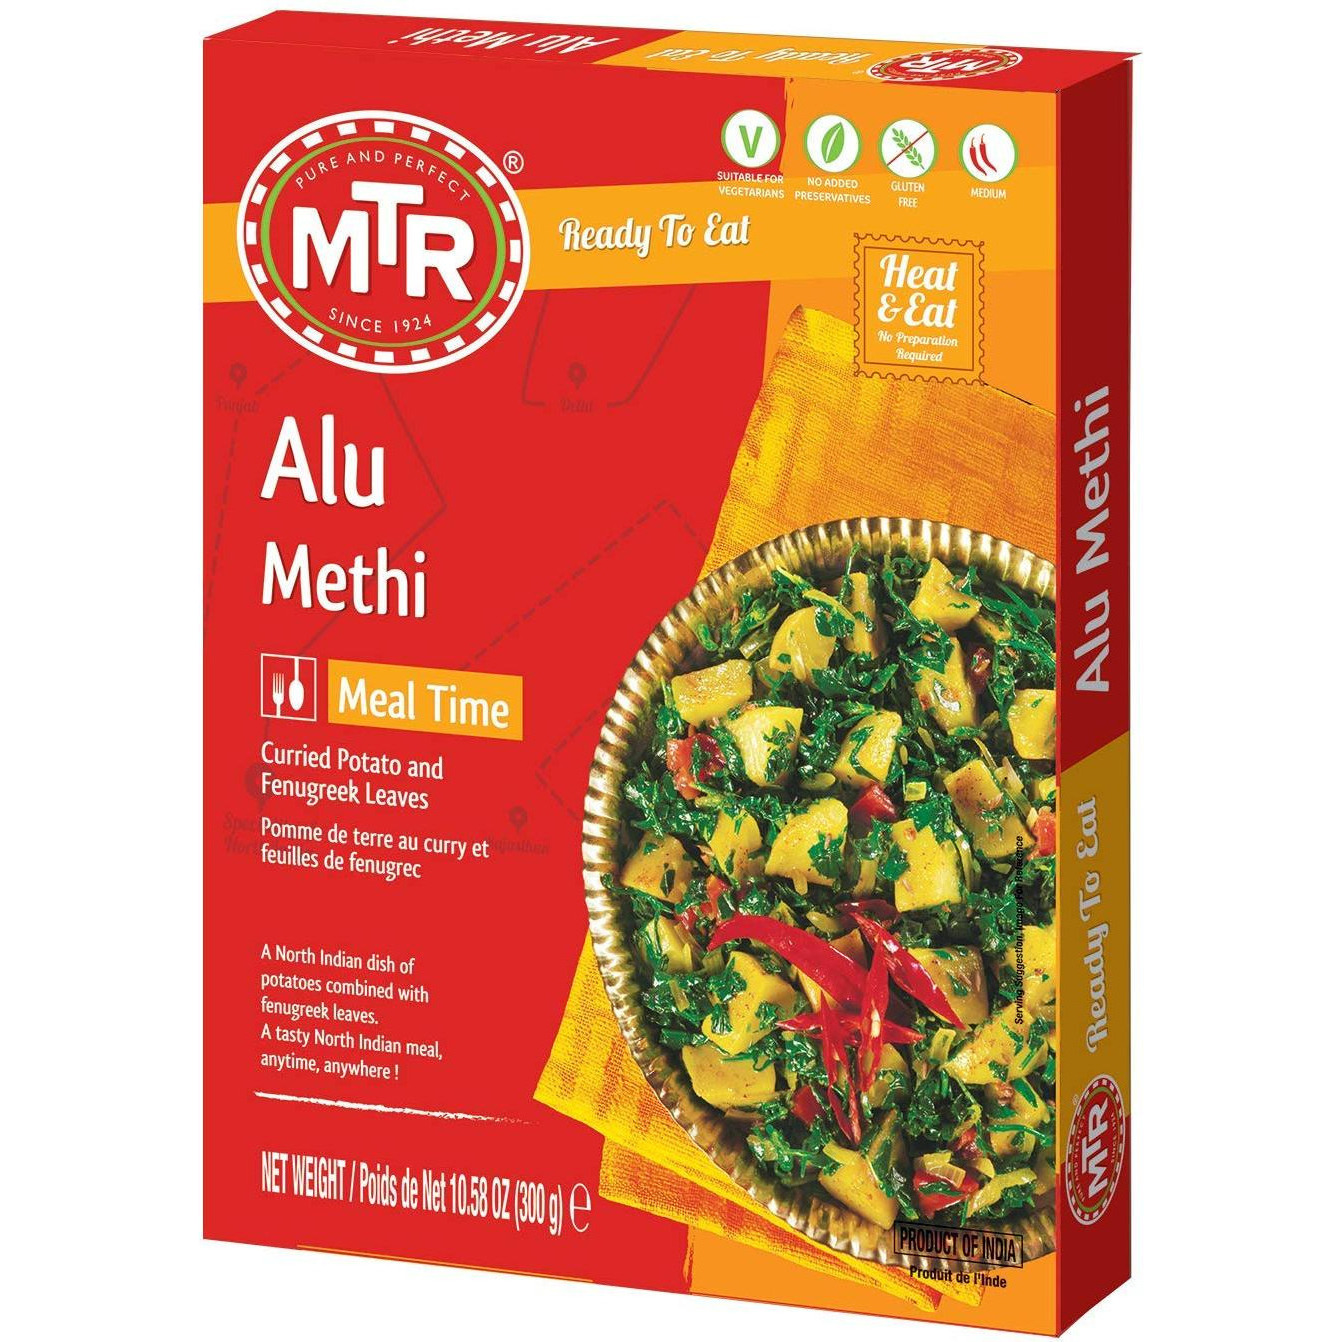 Pack of 5 - Mtr Ready To Eat Alu Methi - 300 Gm (10.5 Oz)